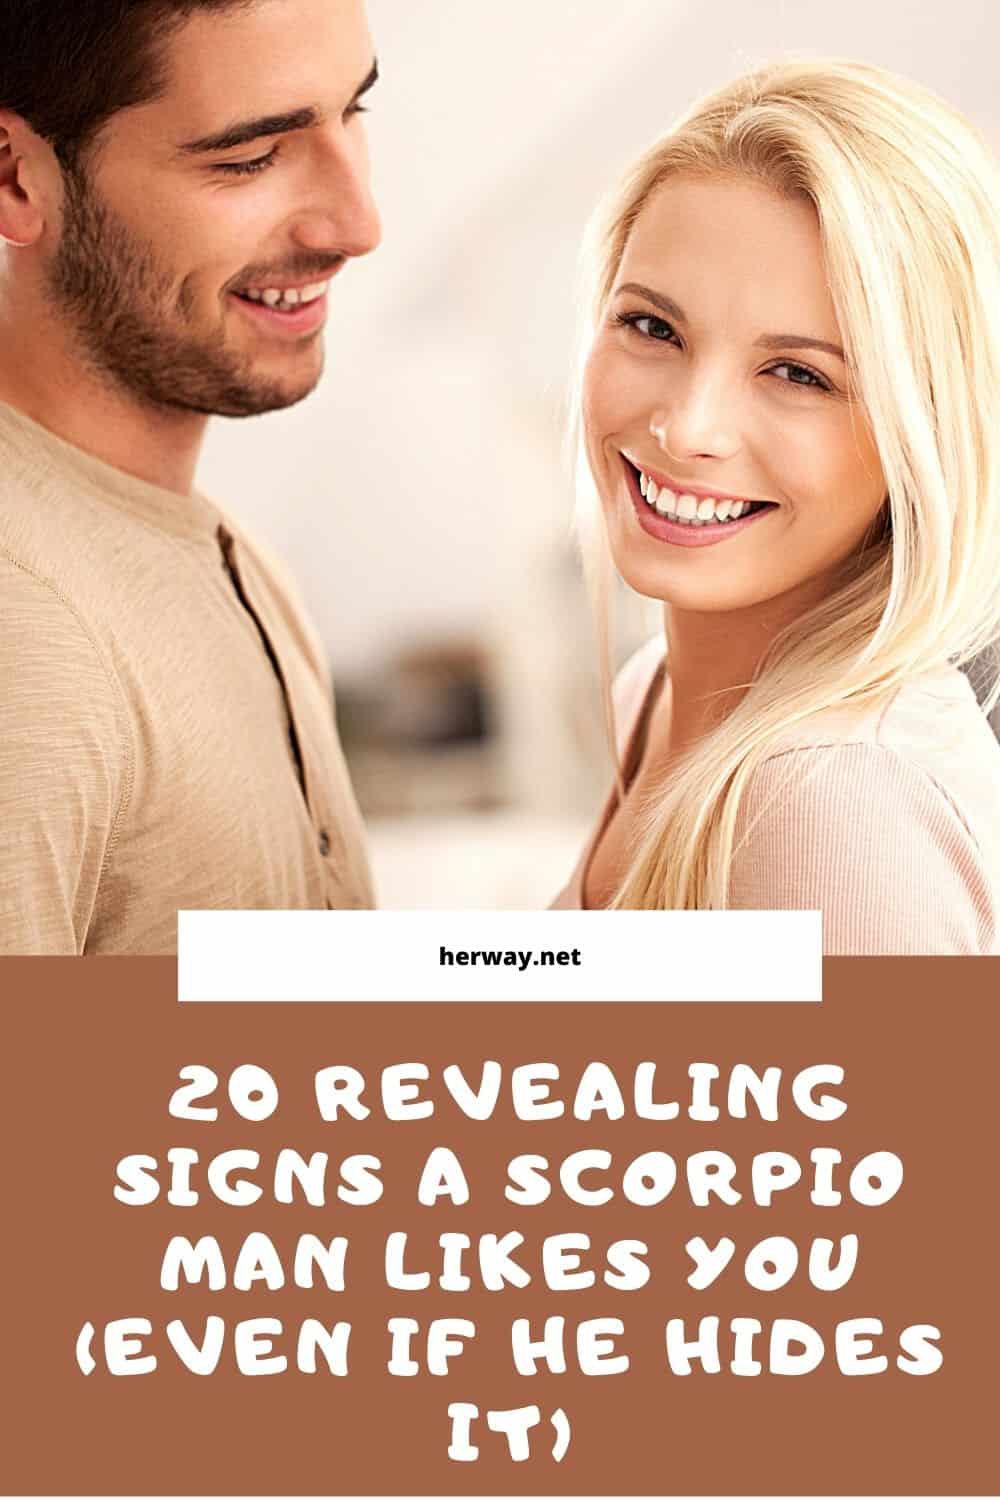 A crush on when has scorpio you a Hidden Signs